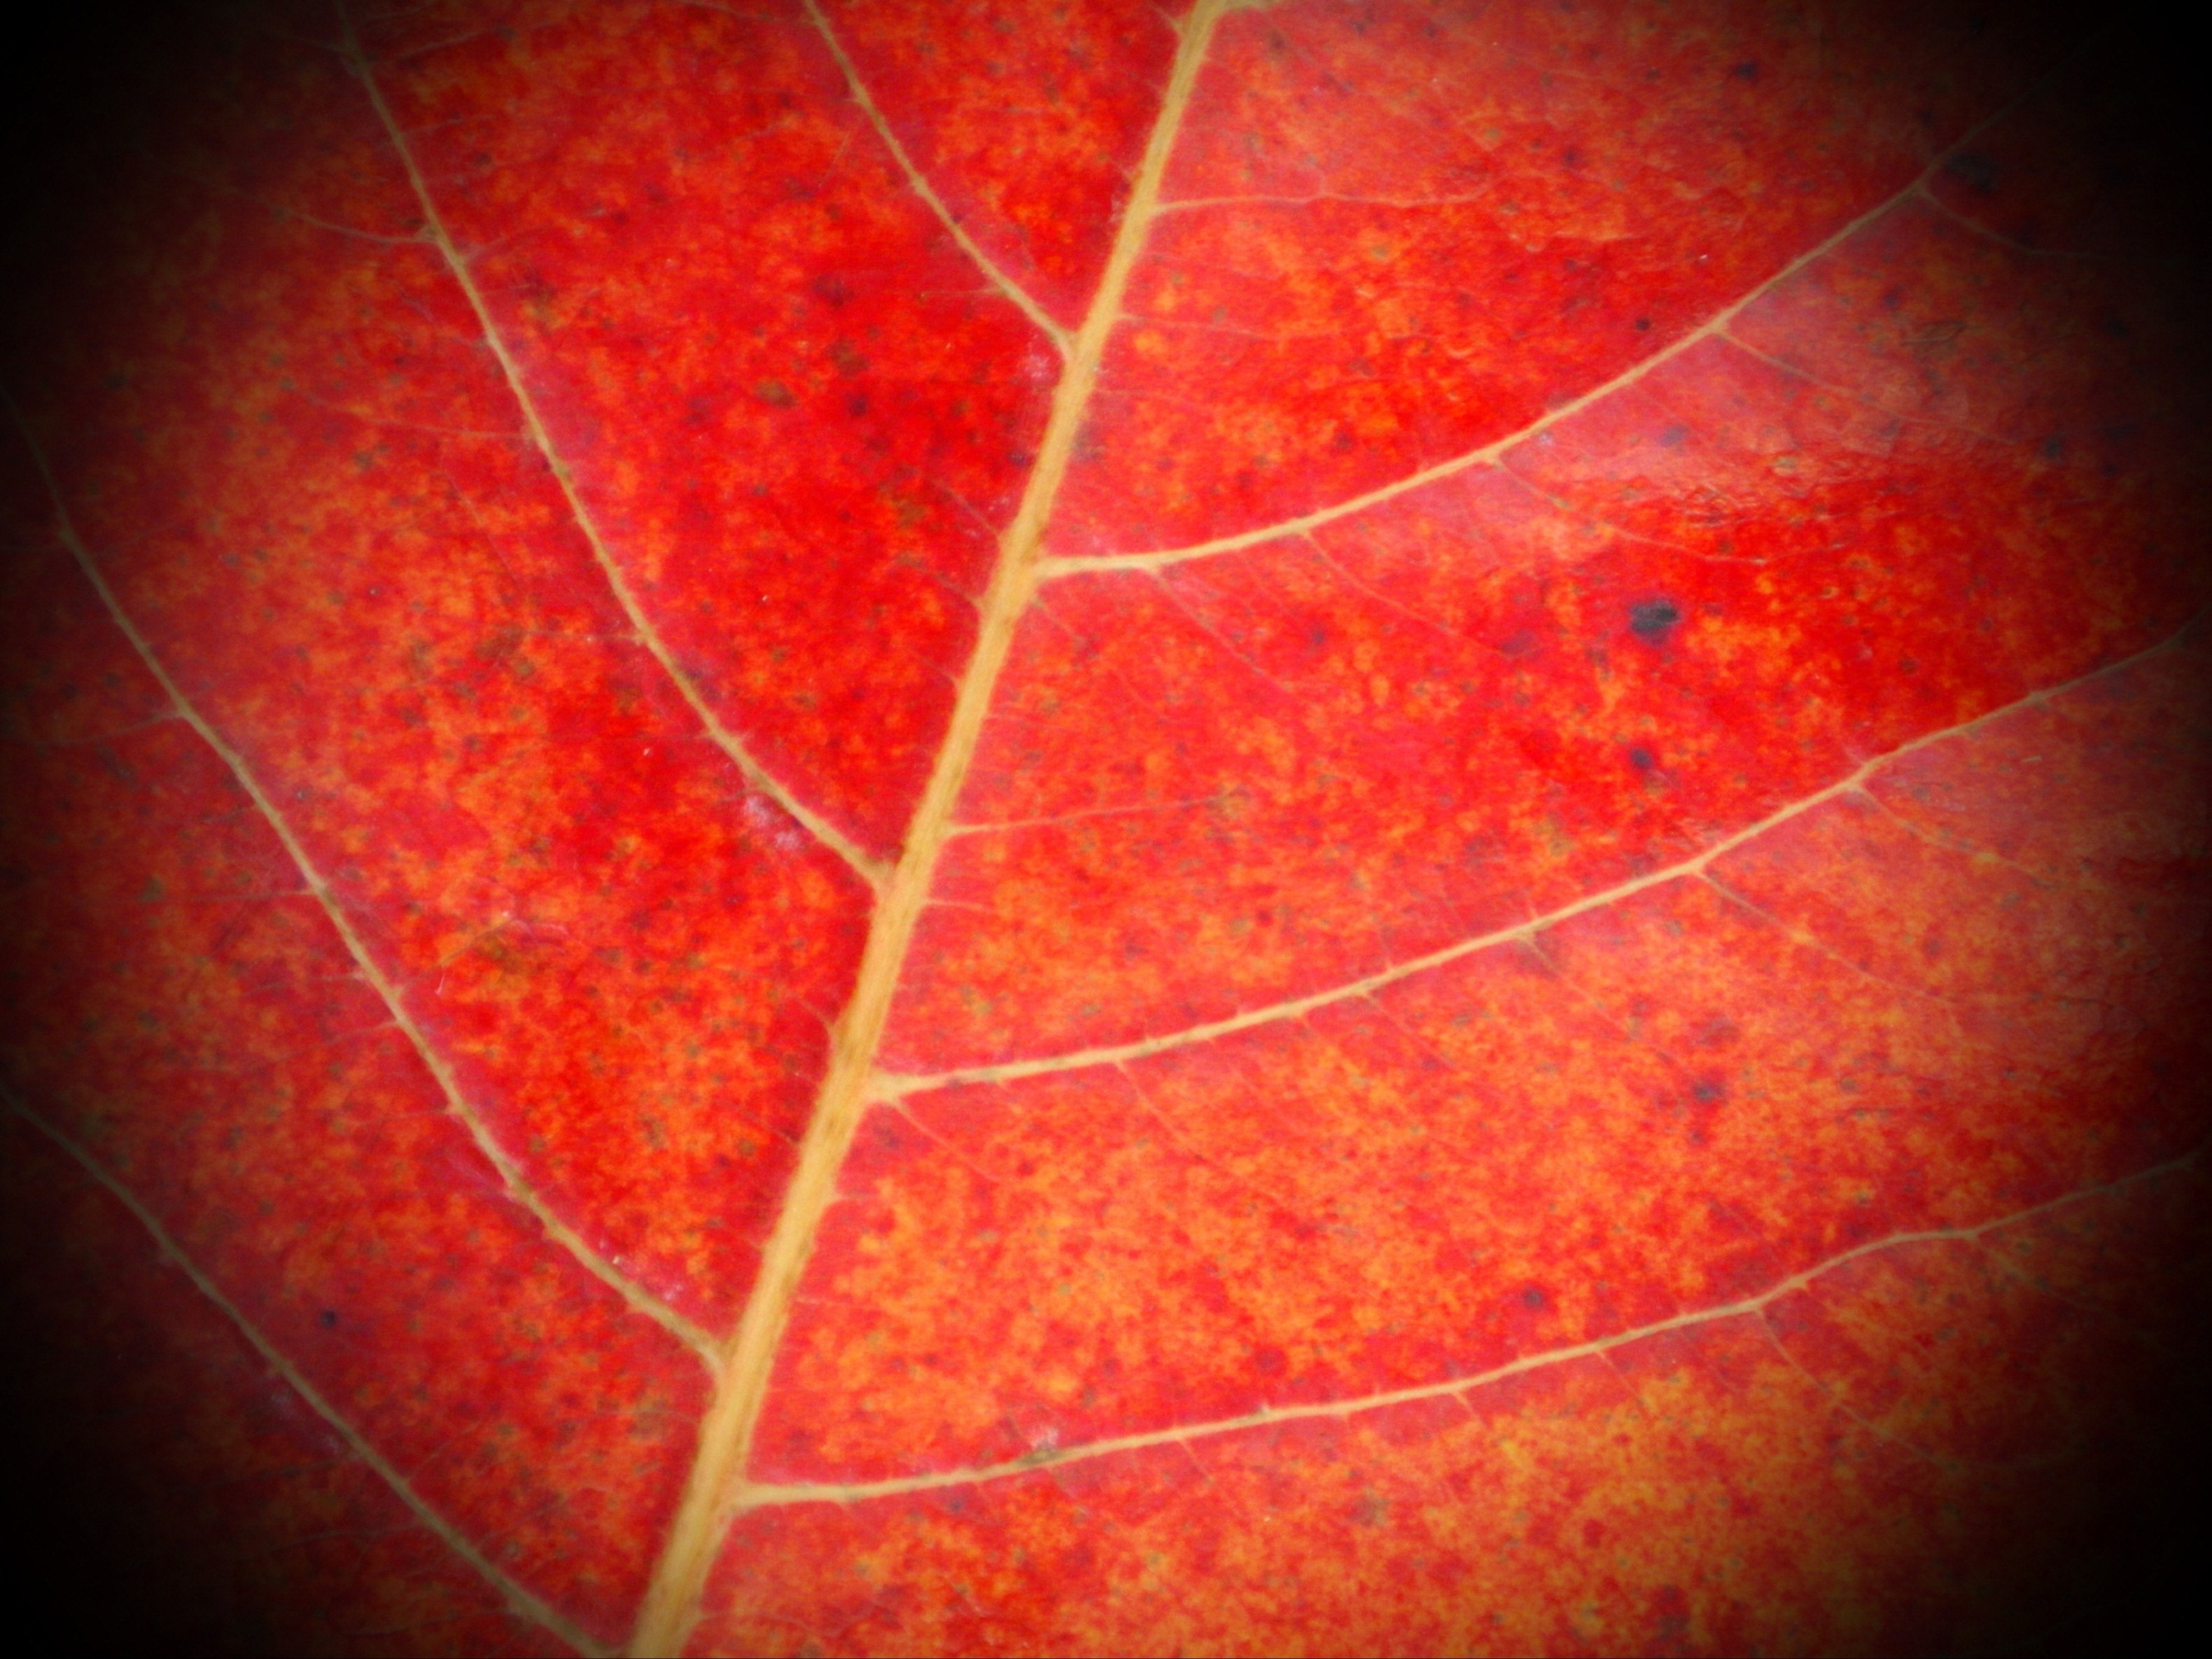 Red leaf close-up photo